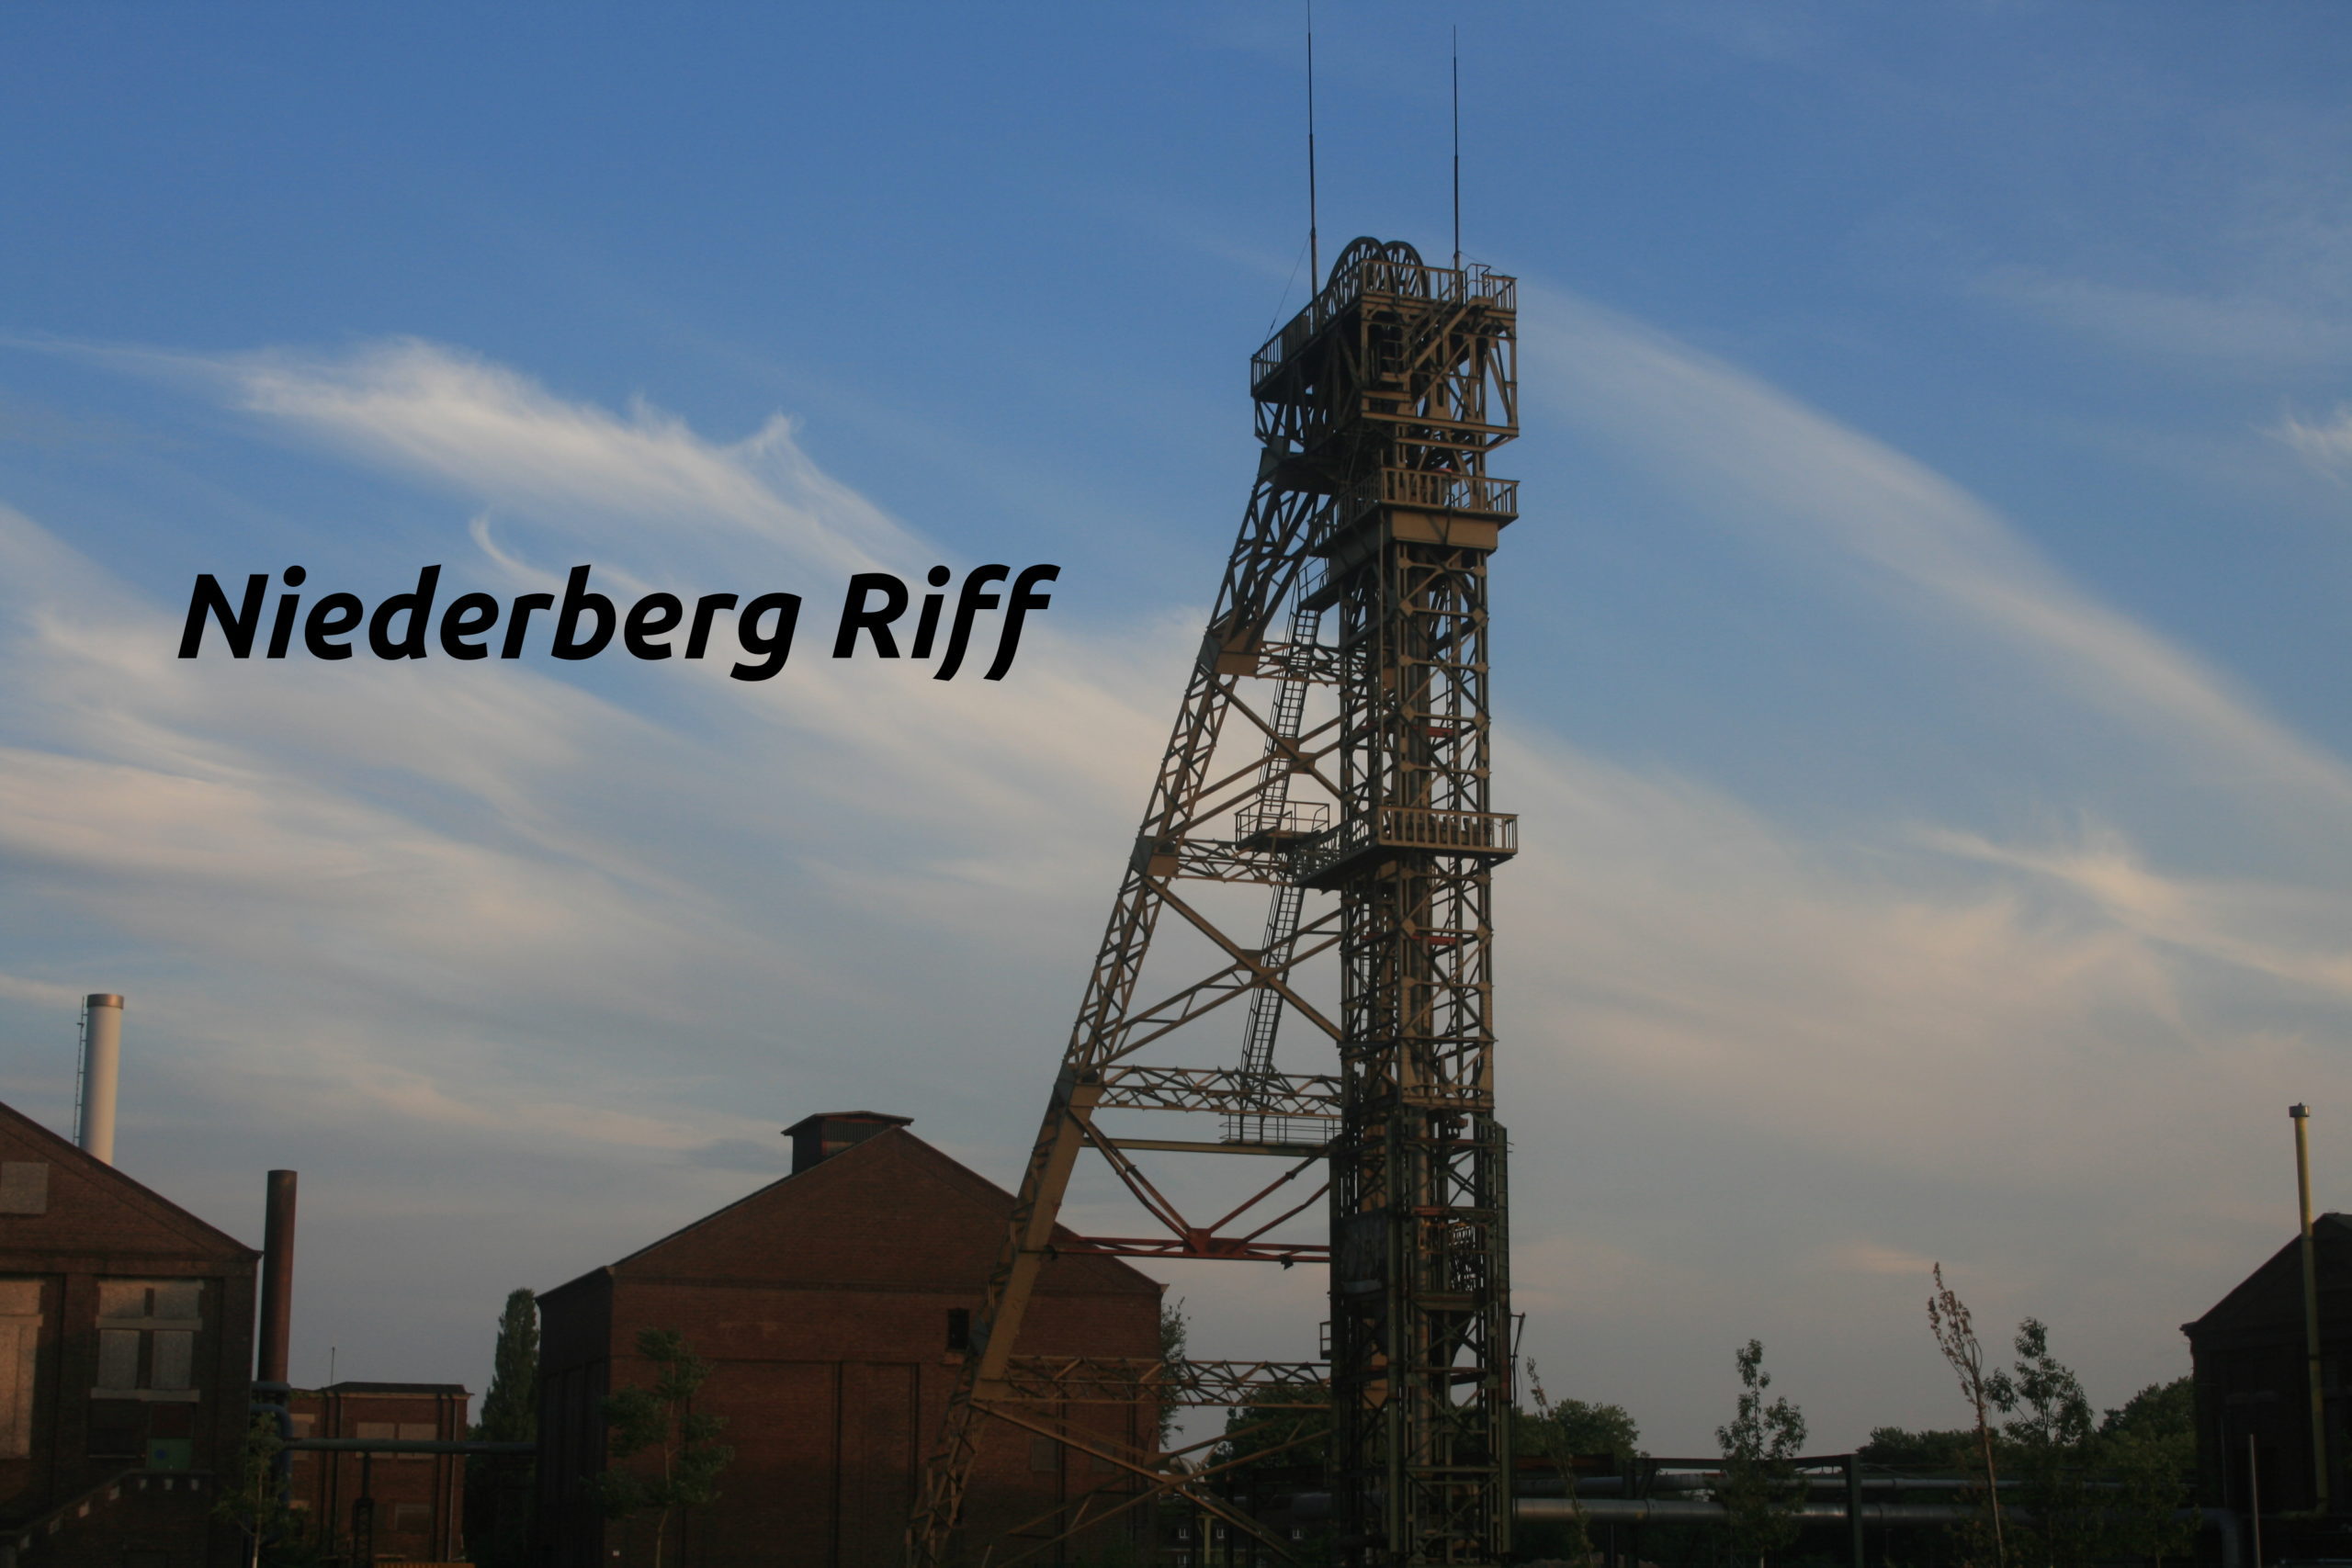 Niederberg Riff